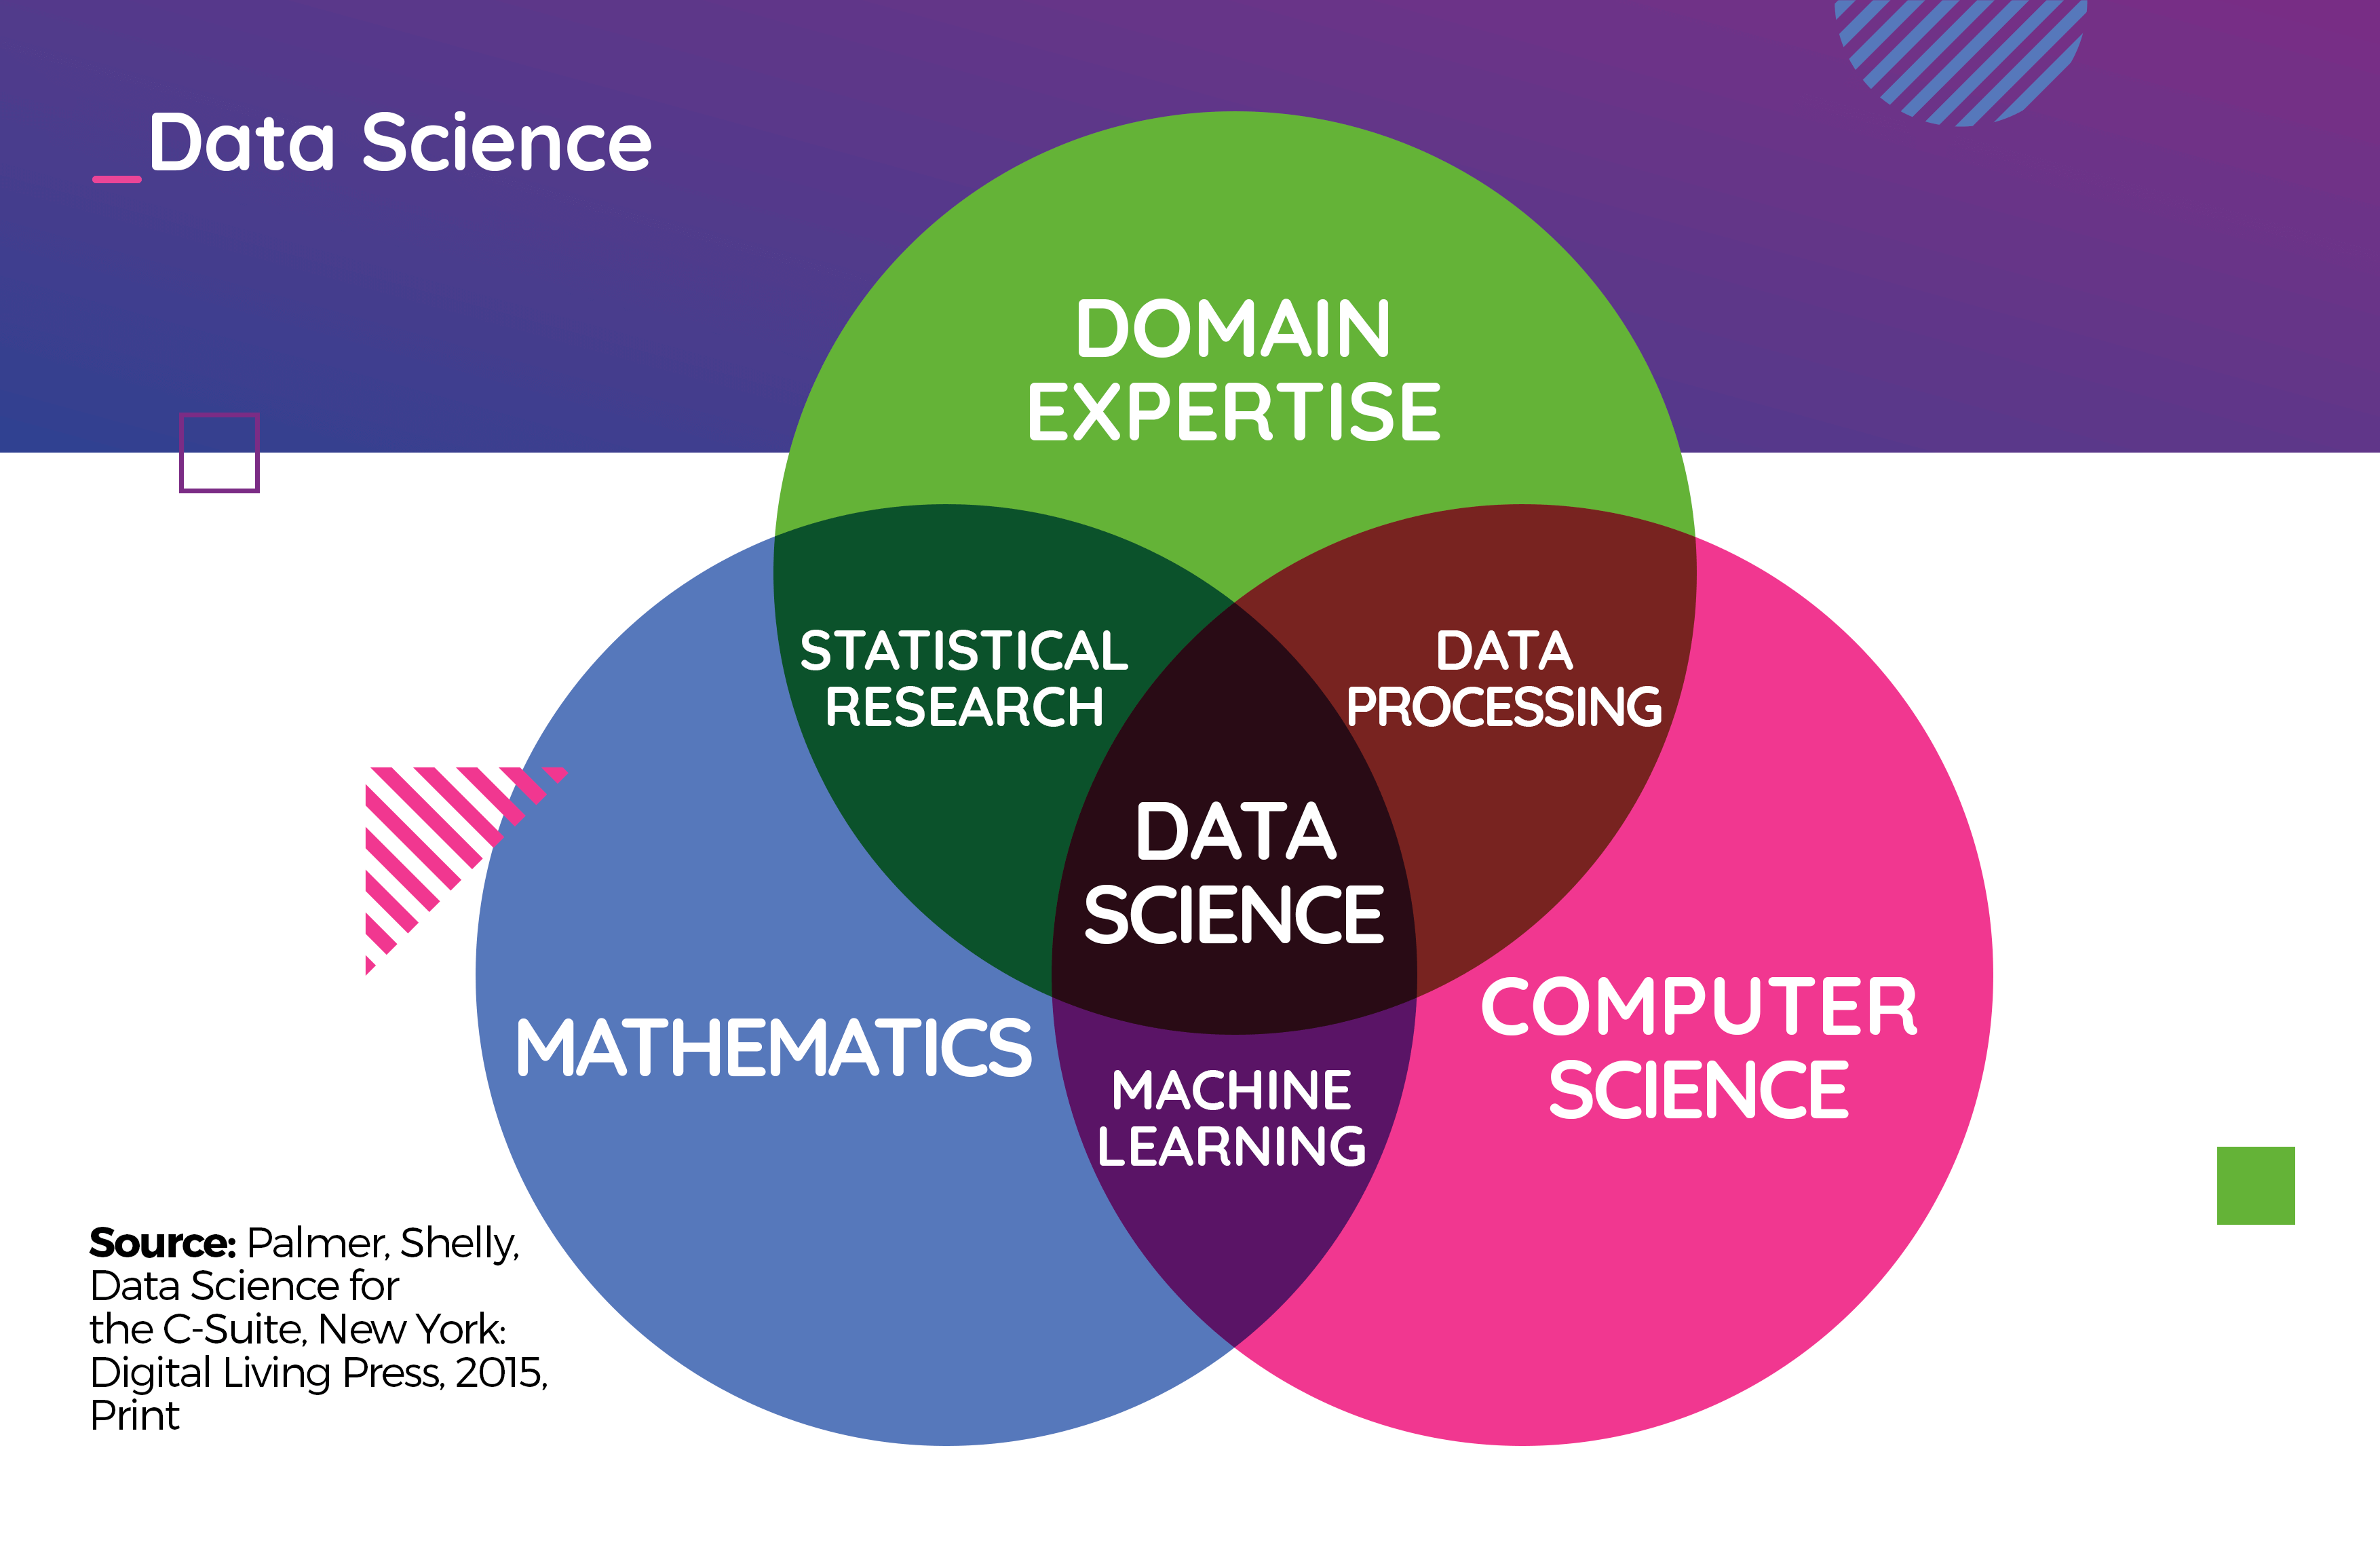 Data Science 